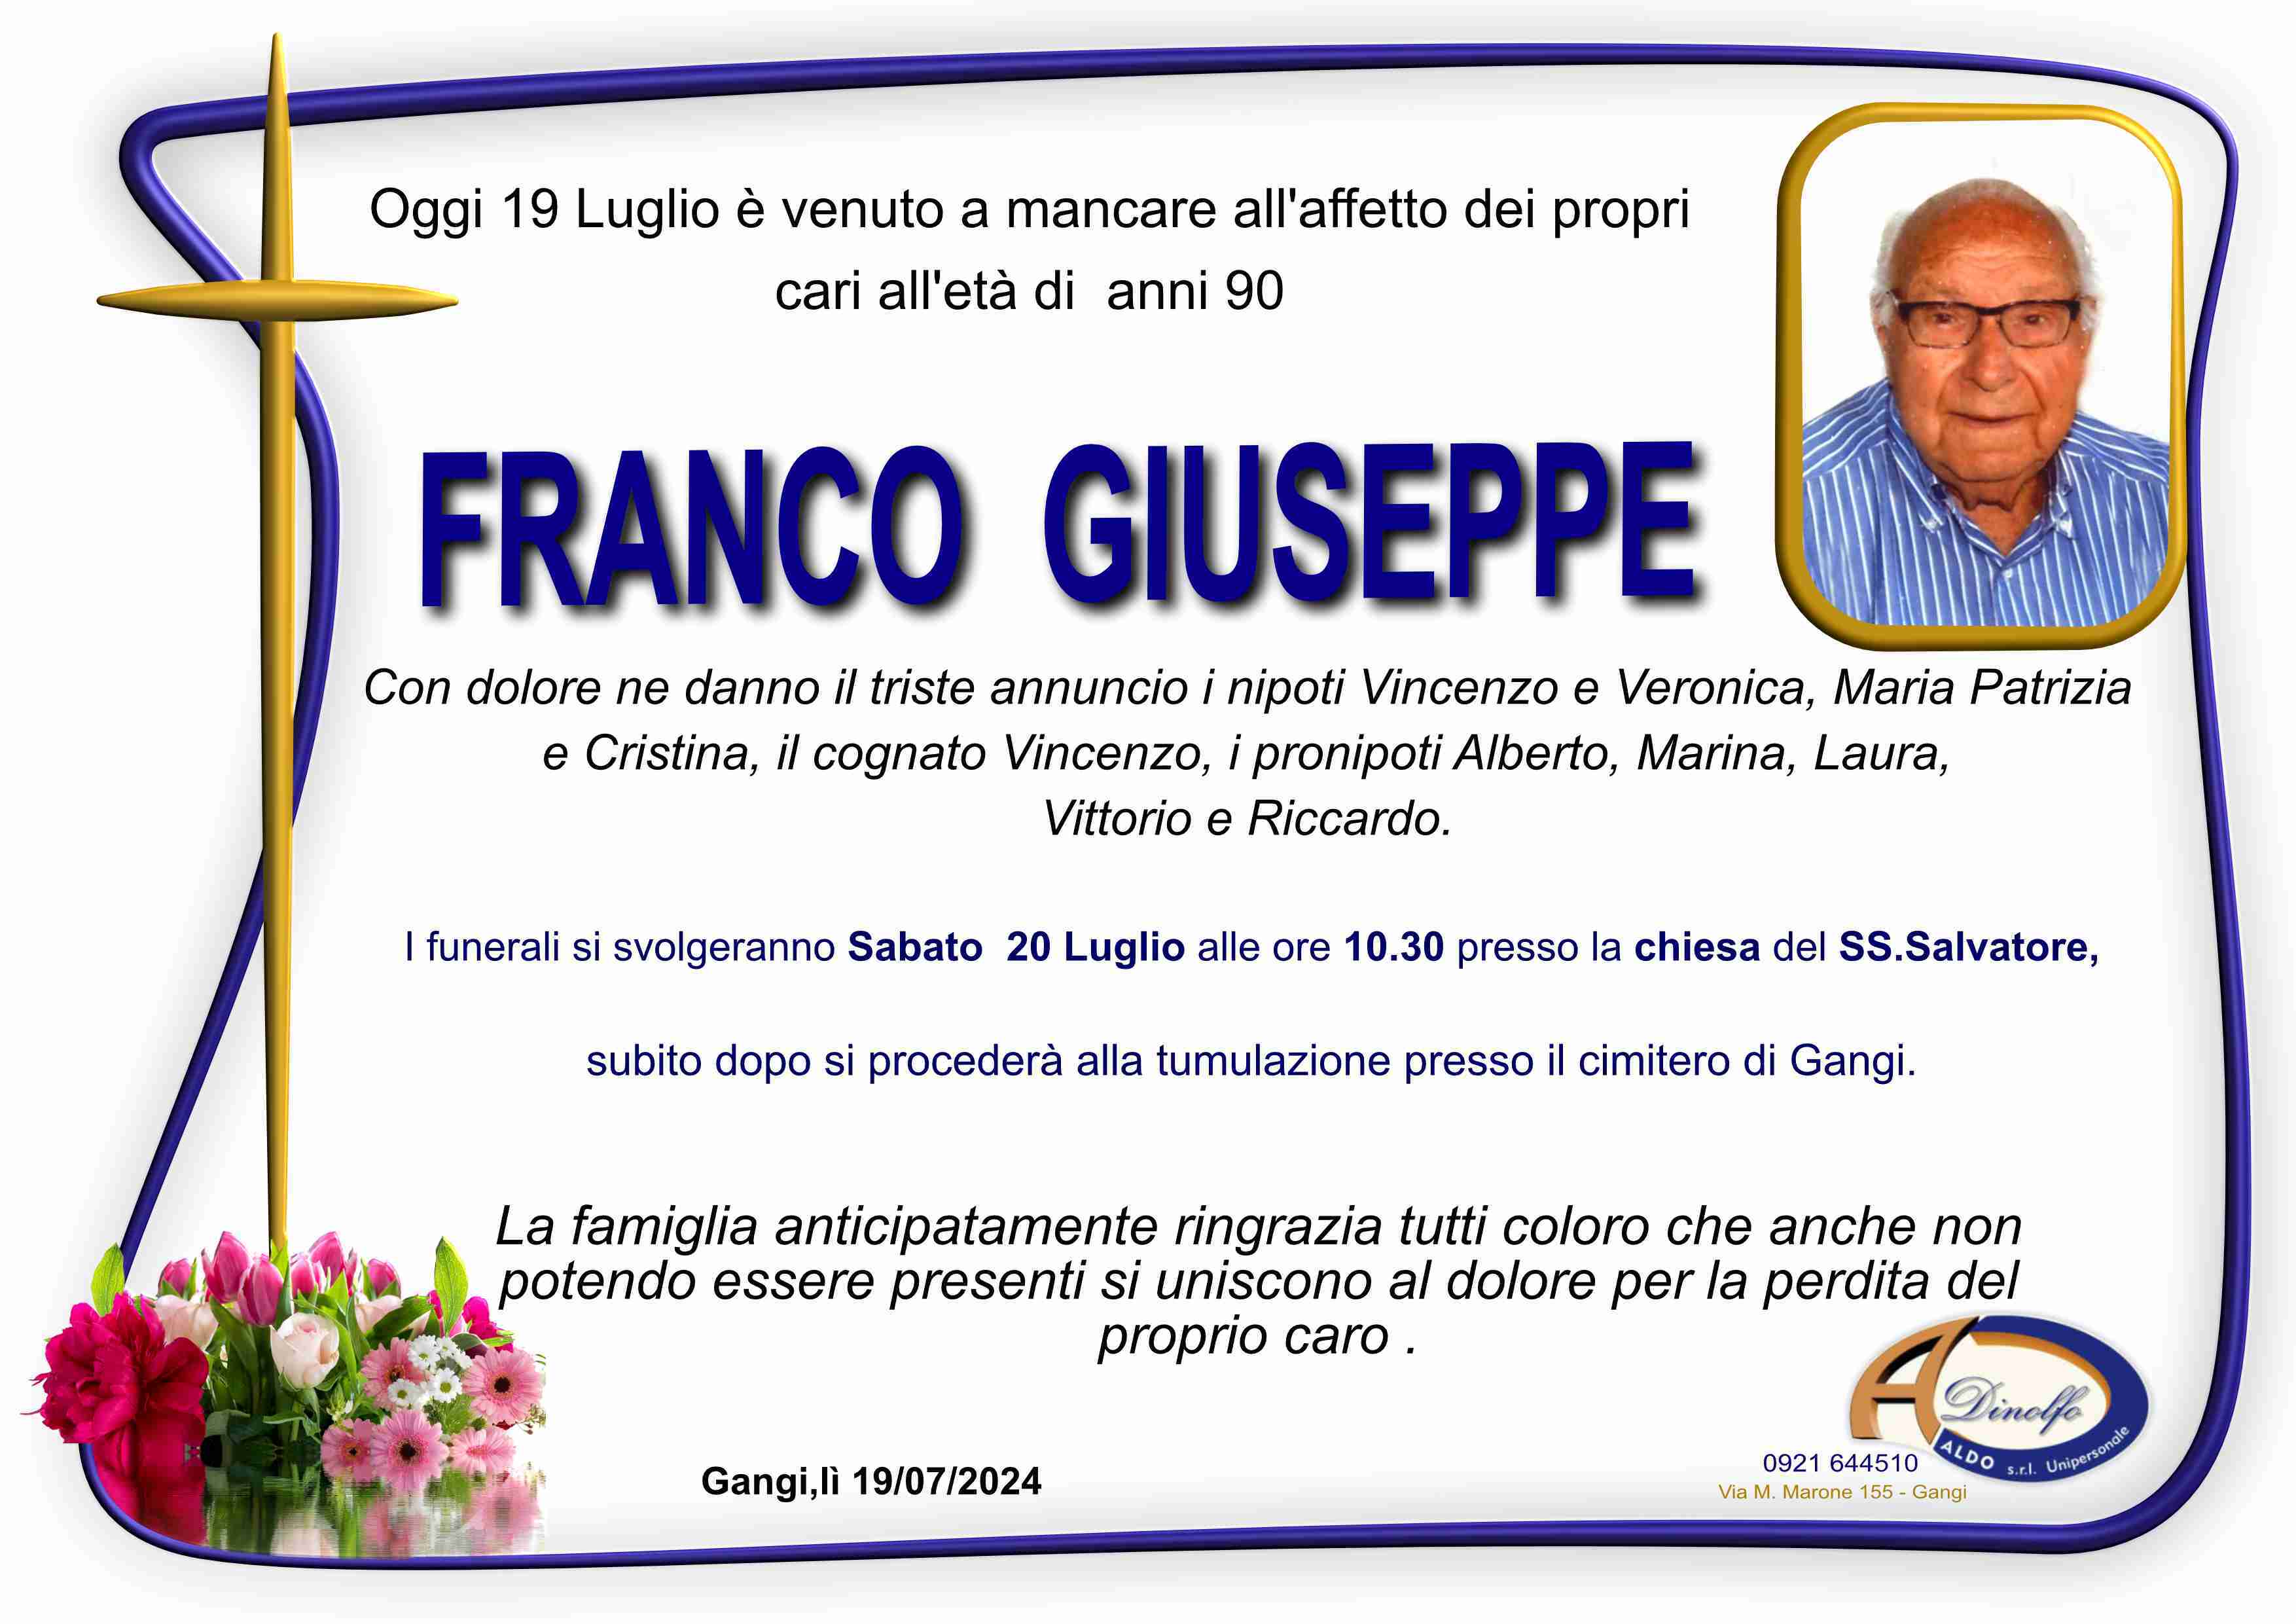 Giuseppe Franco